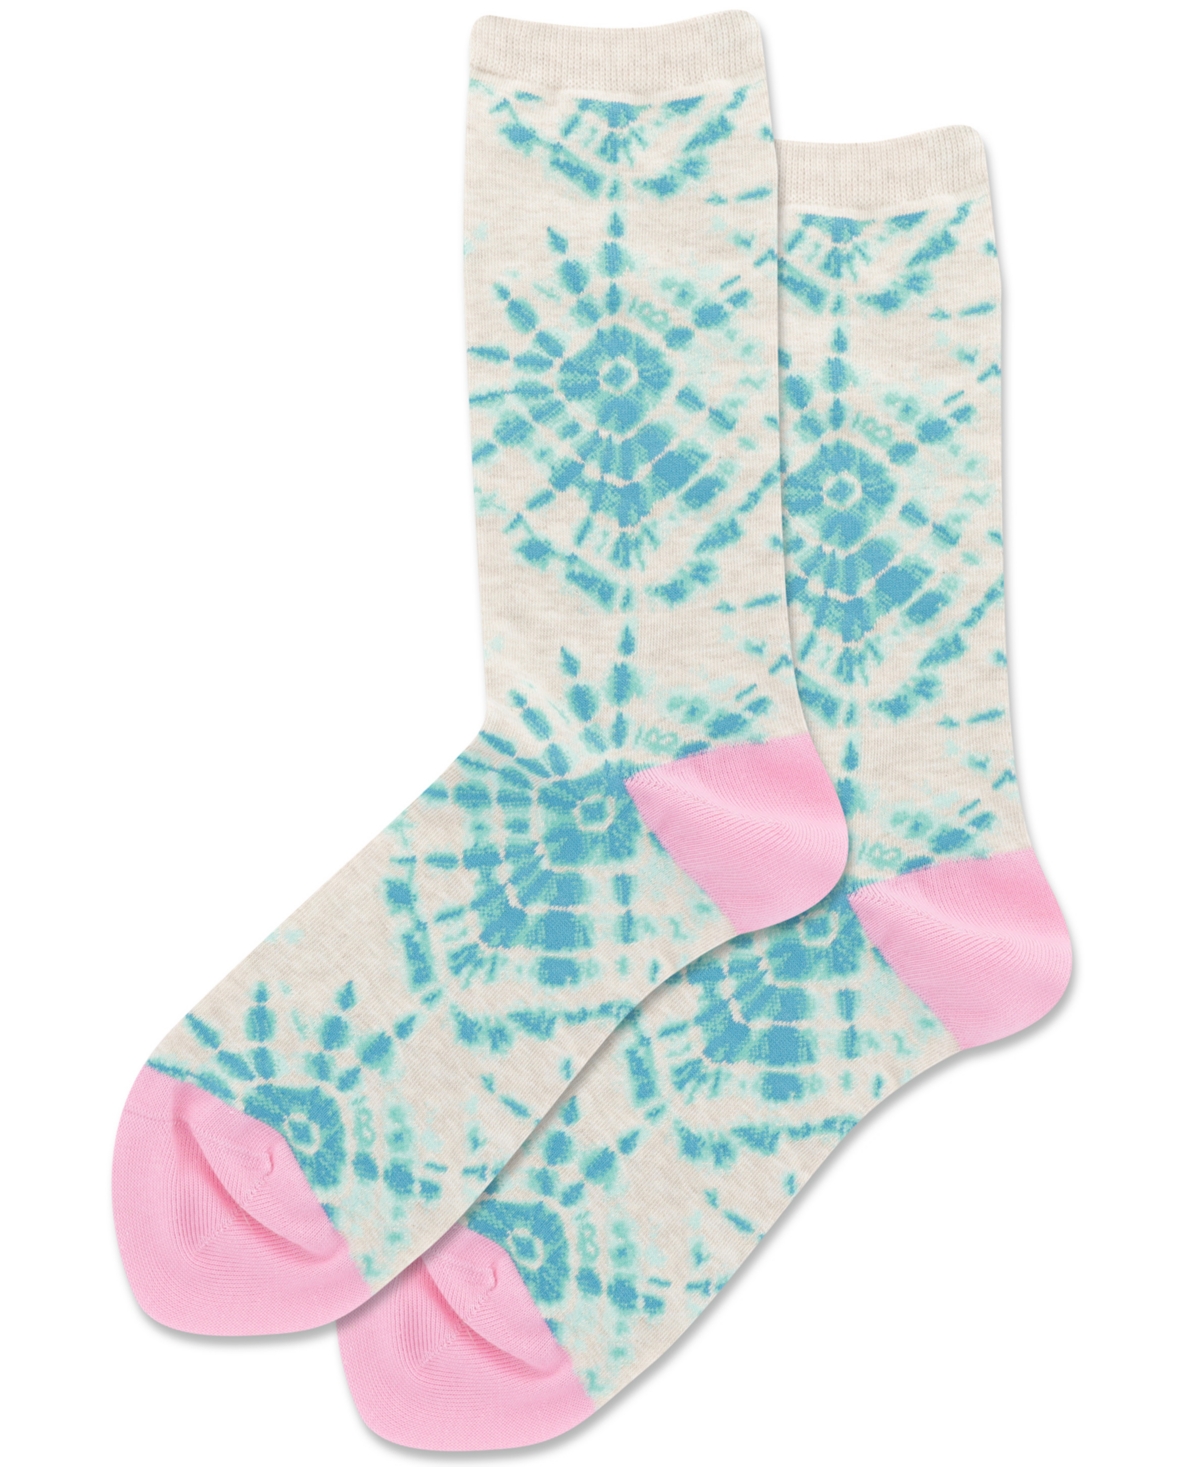 Women's Tie-Dye Crew Socks - Natural